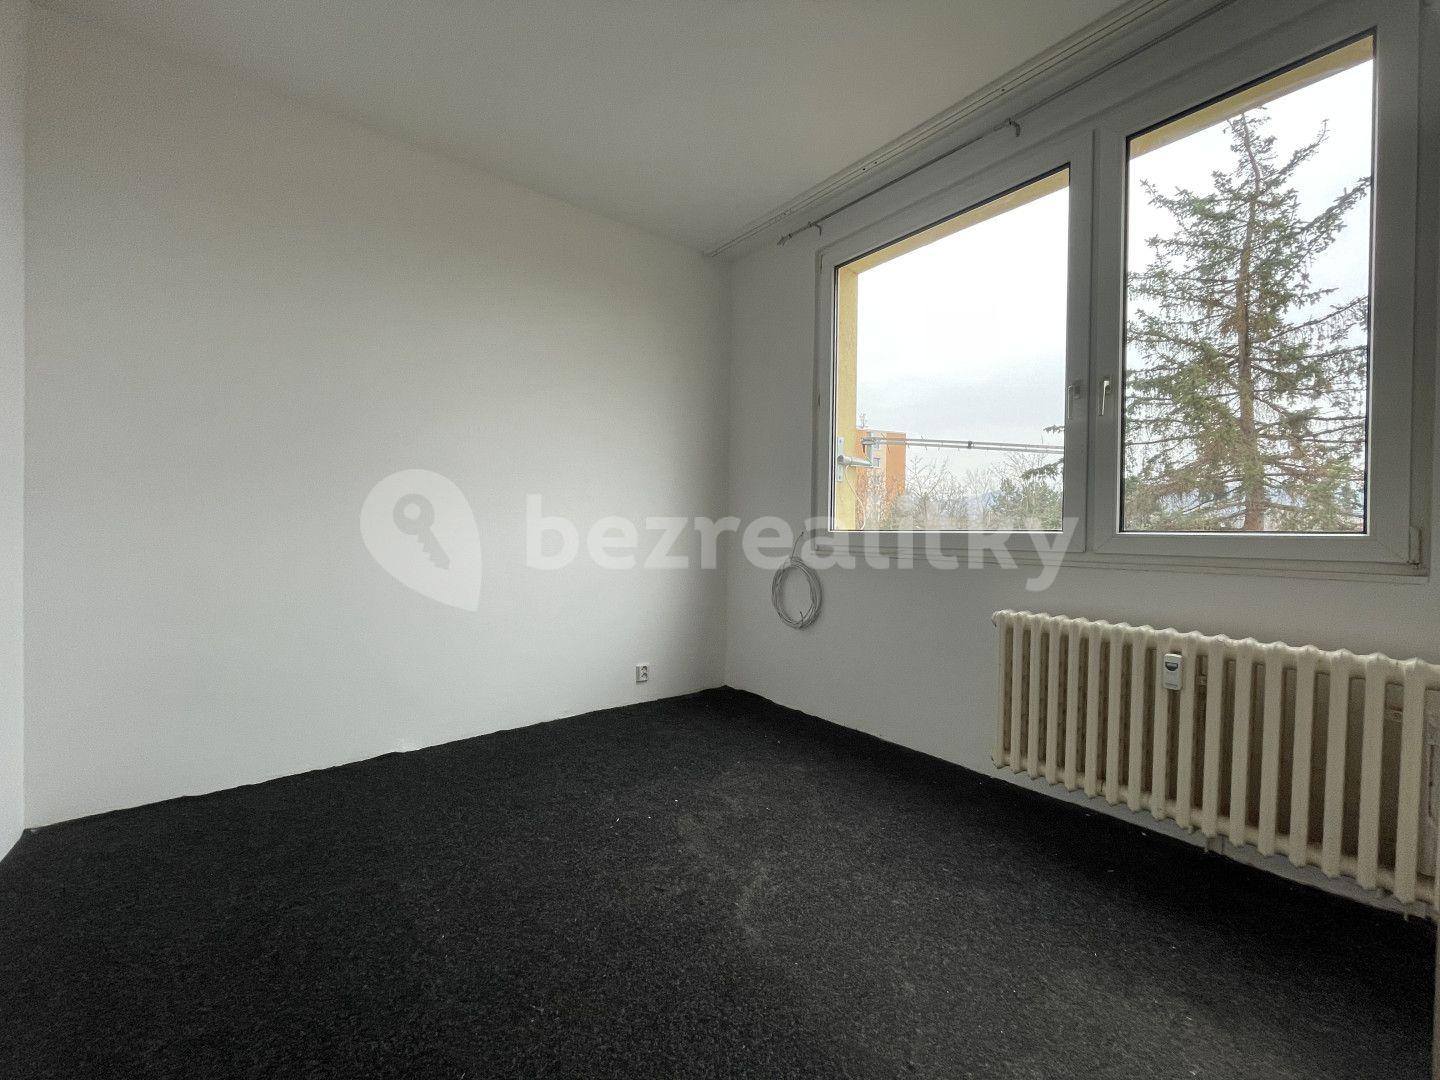 4 bedroom flat for sale, 75 m², Jirkovská, Chomutov, Ústecký Region